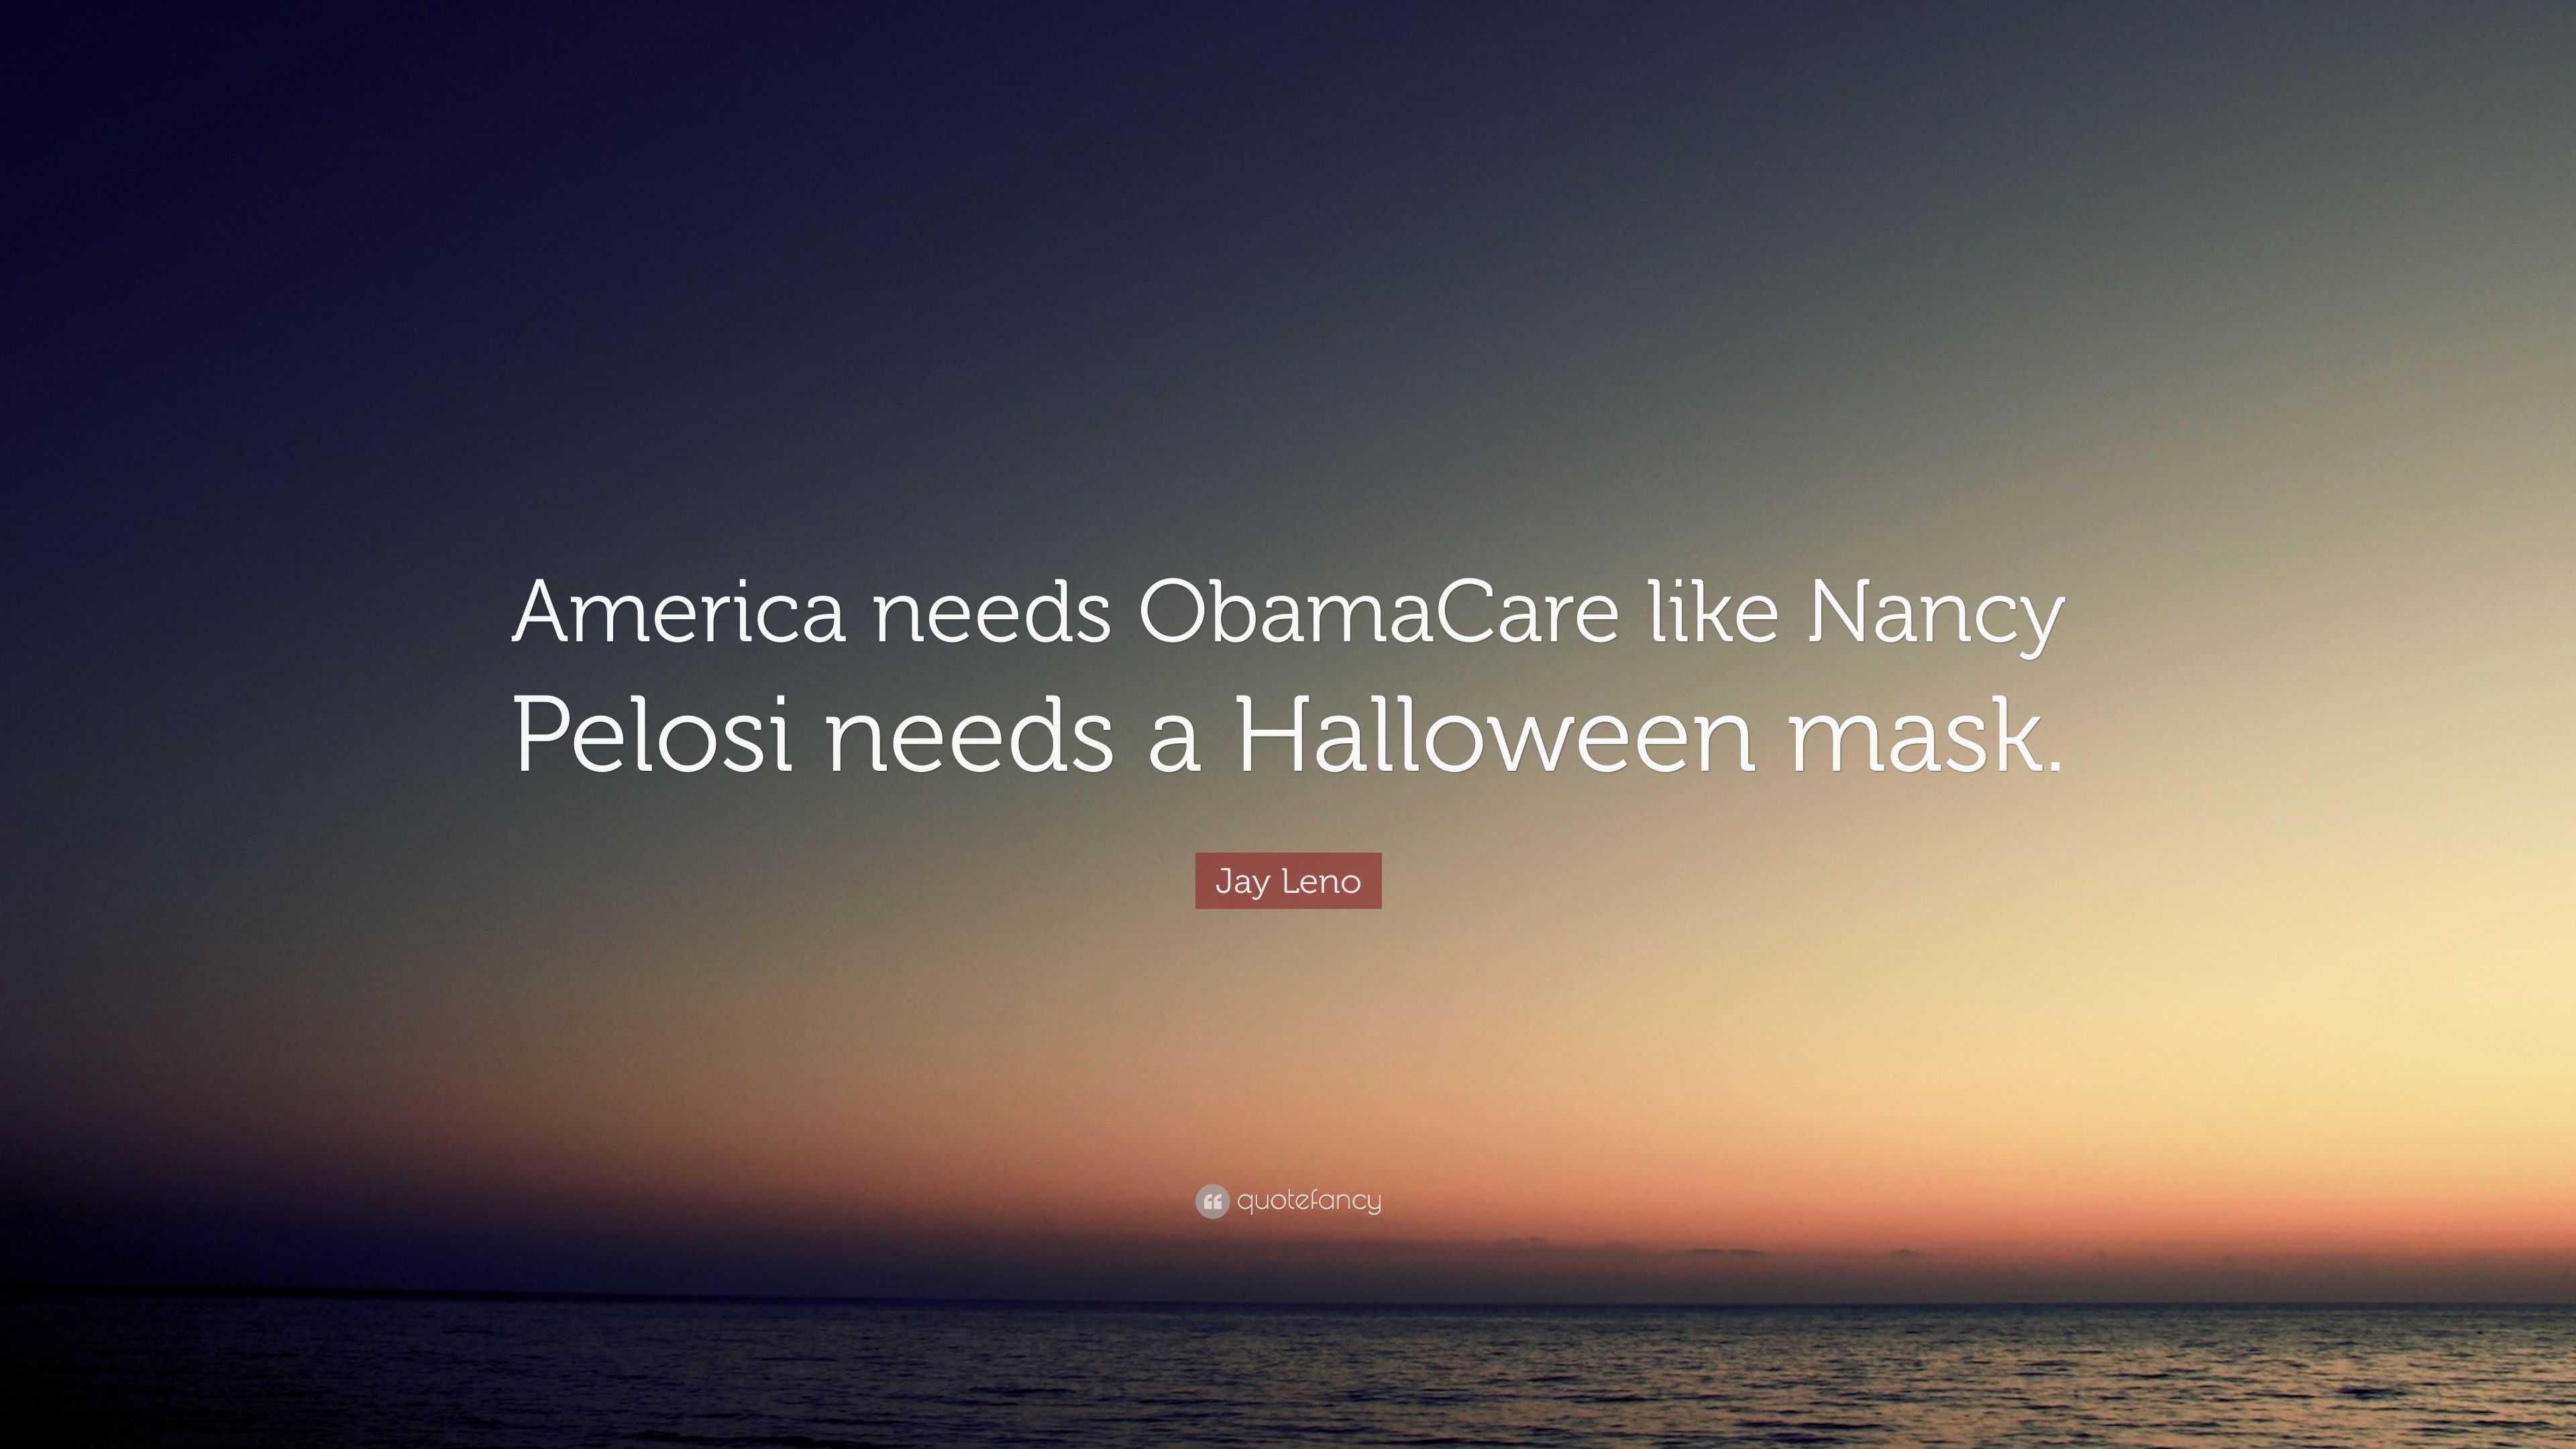 Jay Leno Quote: “America needs ObamaCare like Nancy Pelosi needs a Halloween mask ...